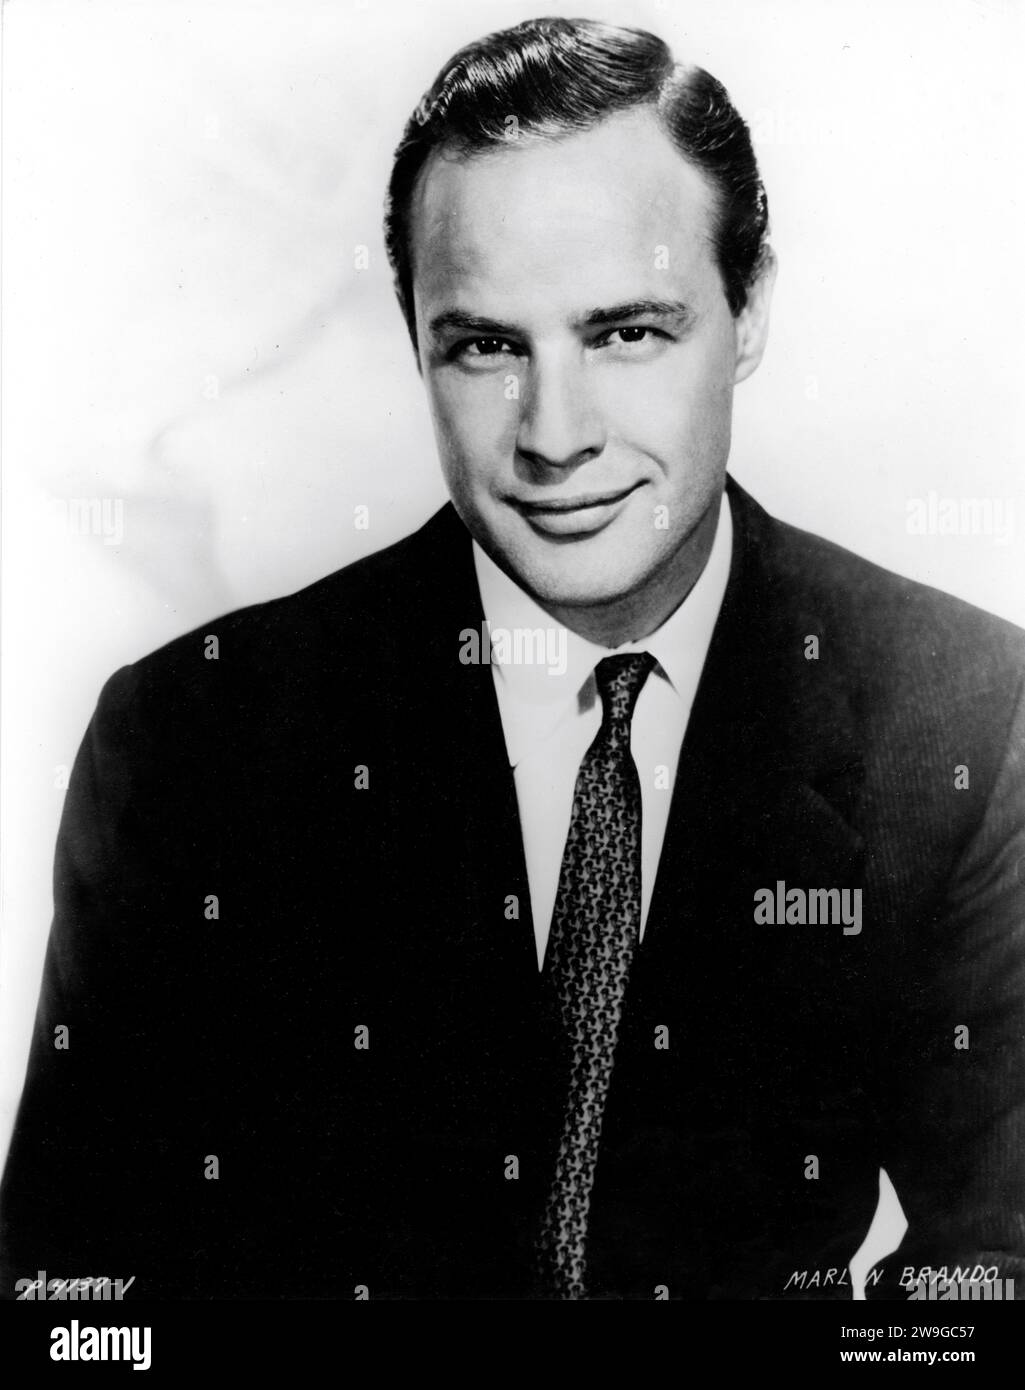 MARLON BRANDO 1959 Portrait publicity for Paramount Pictures Stock Photo